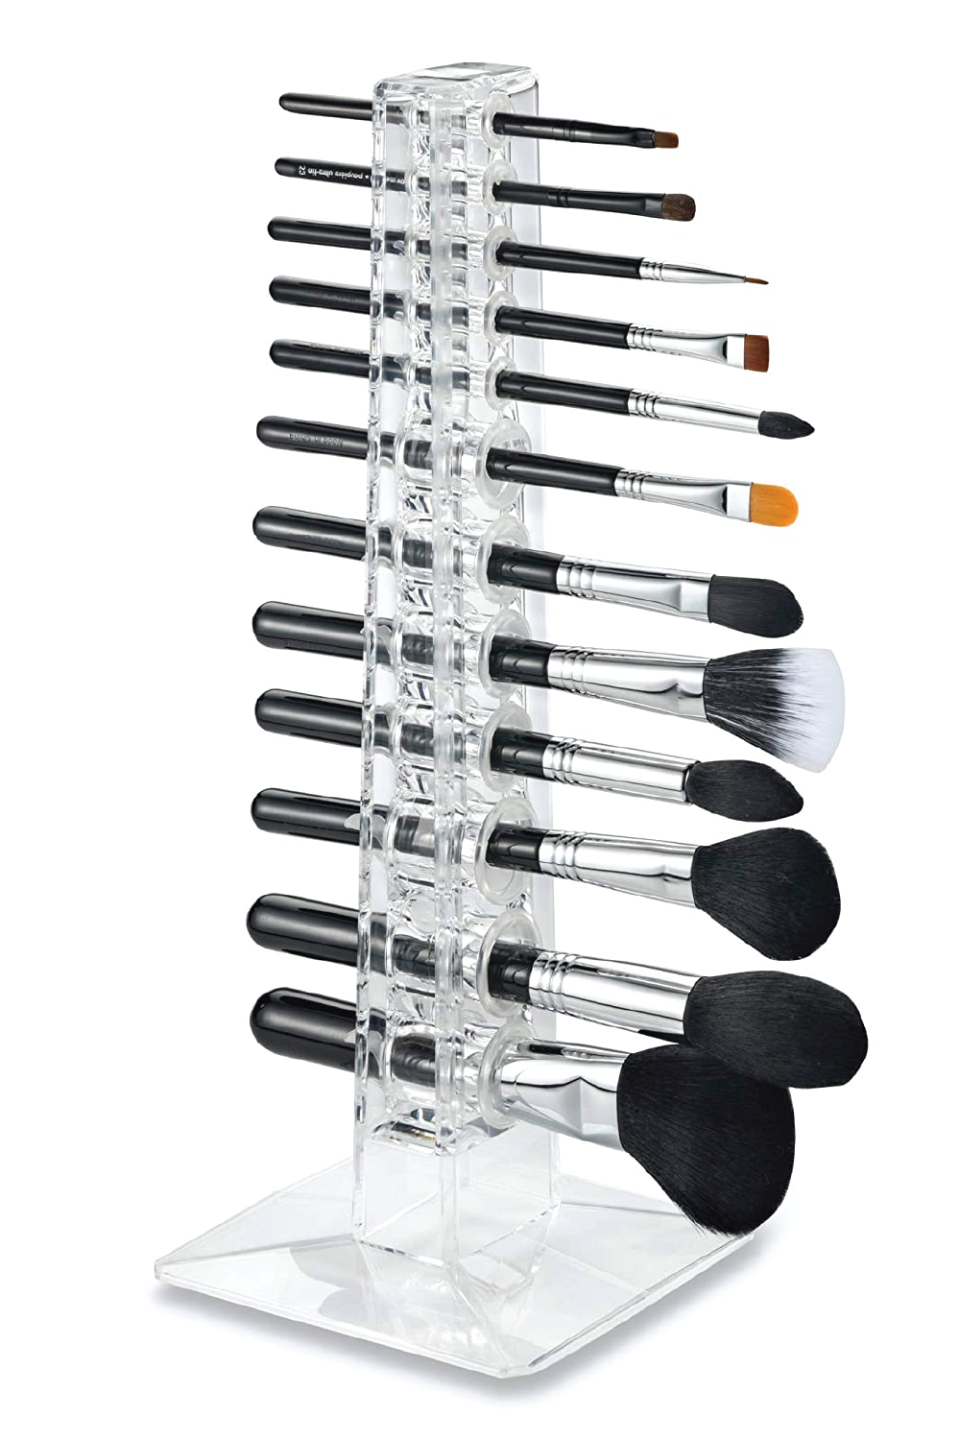 byAlegory Acrylic Makeup Beauty Brush Organizer